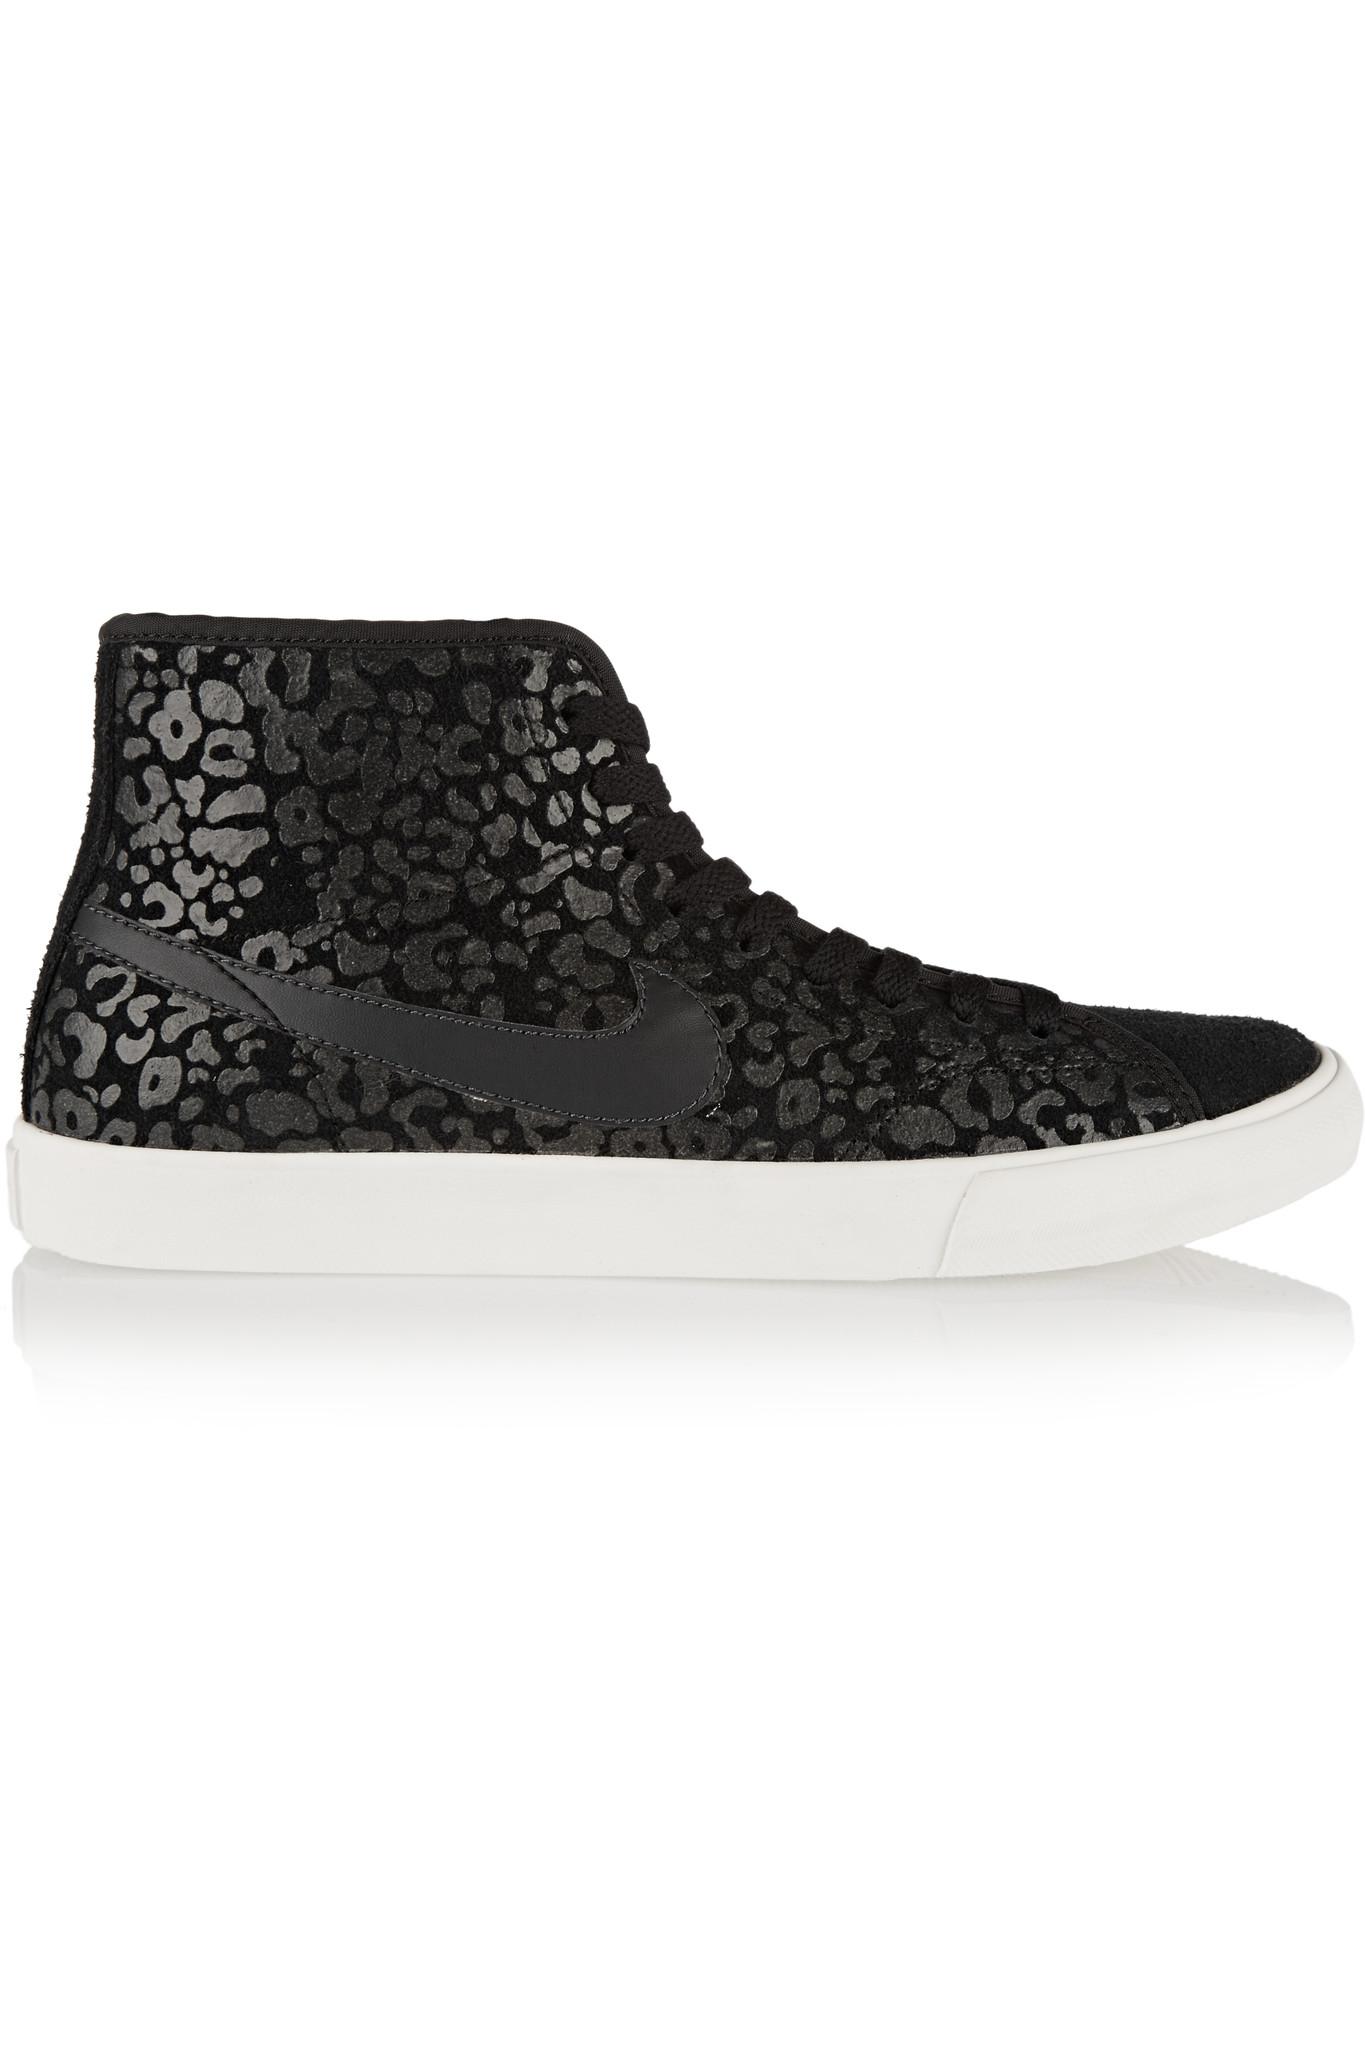 nike black leopard print shoes